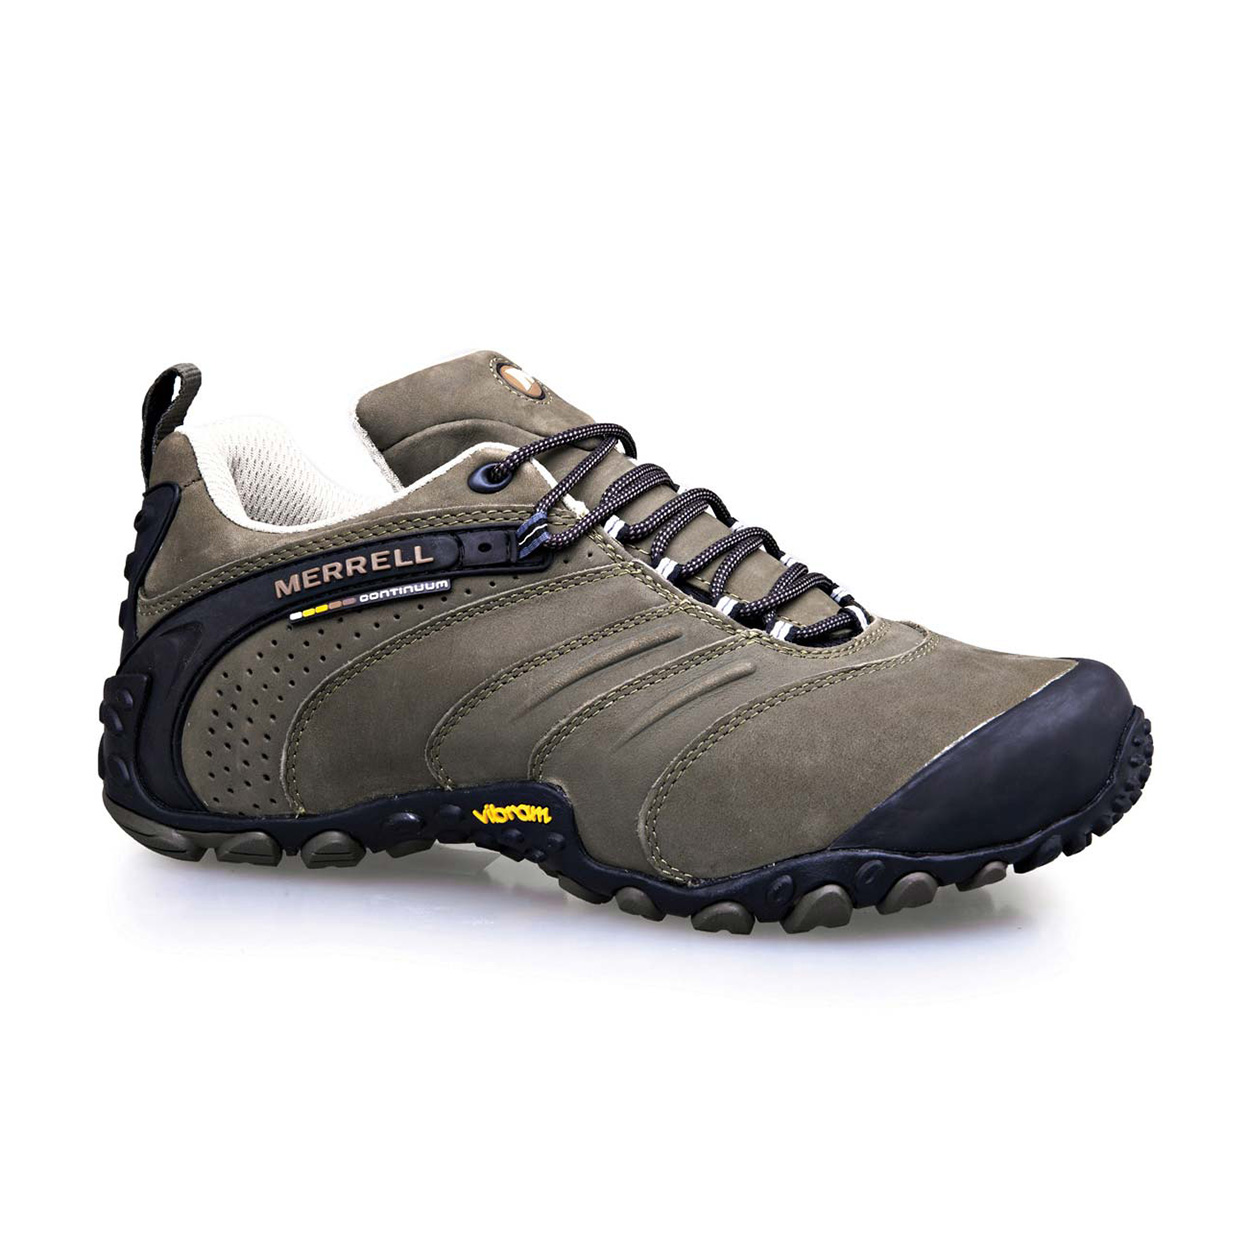 MERRELL Chameleon II LTR J80549 Outdoor Hiking Trekking Trainers Shoes Mens New 